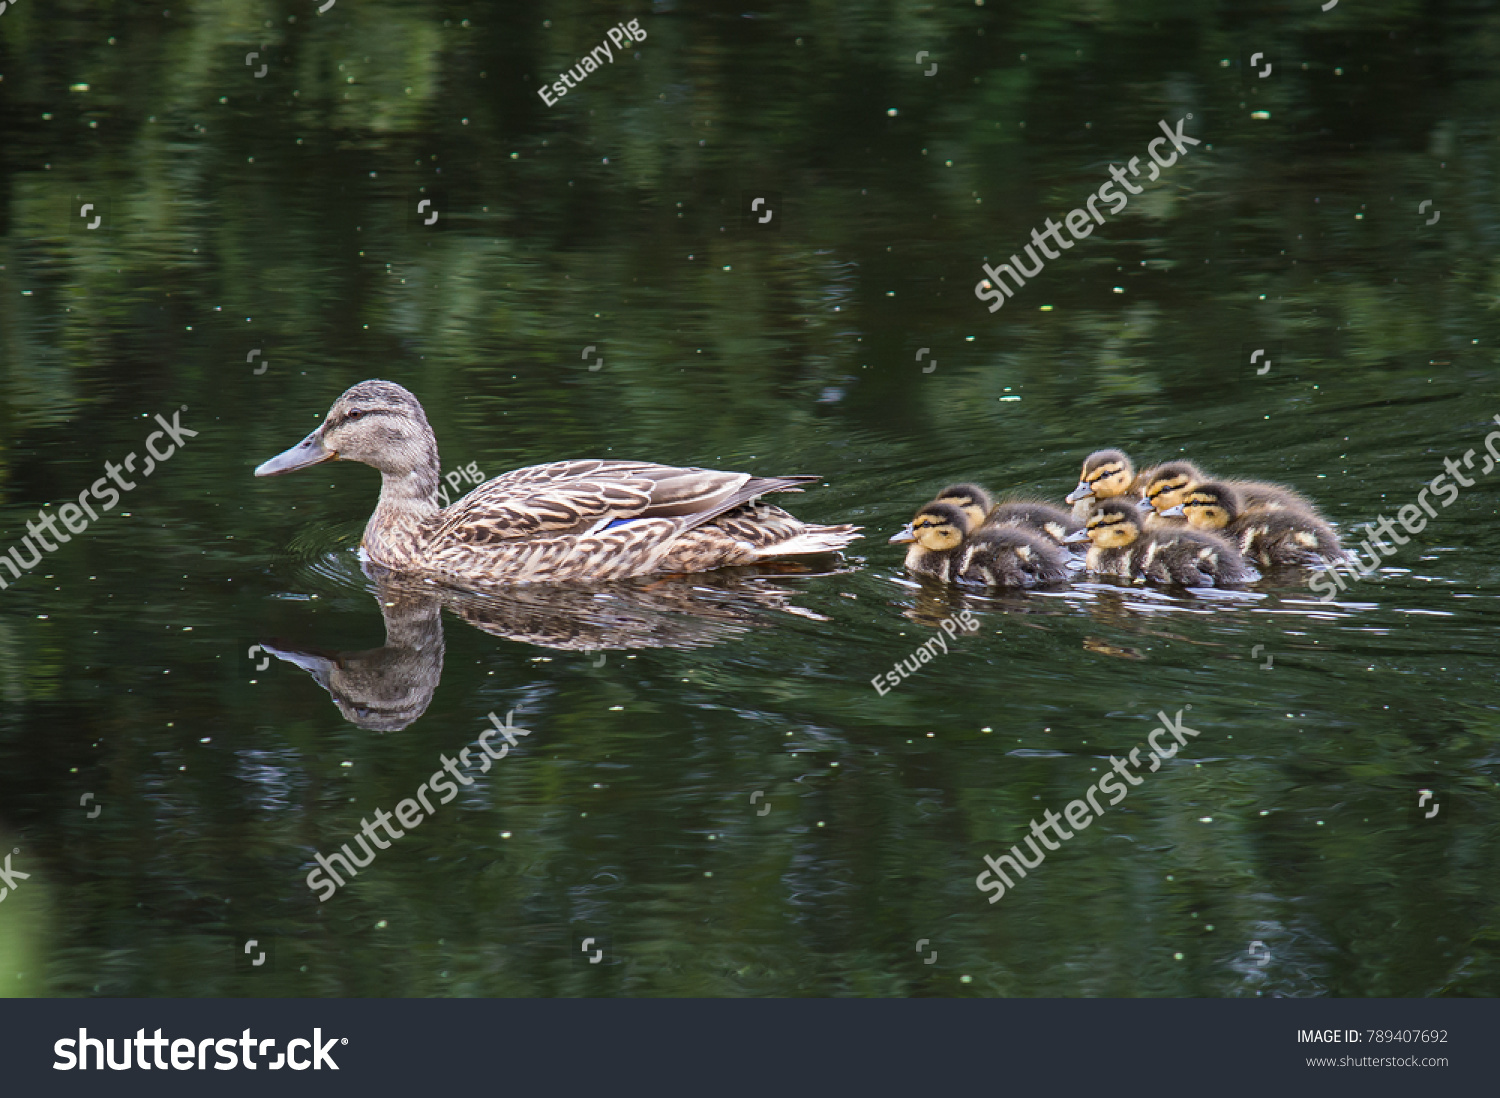 A ducks' offspring follow closely behind her #789407692